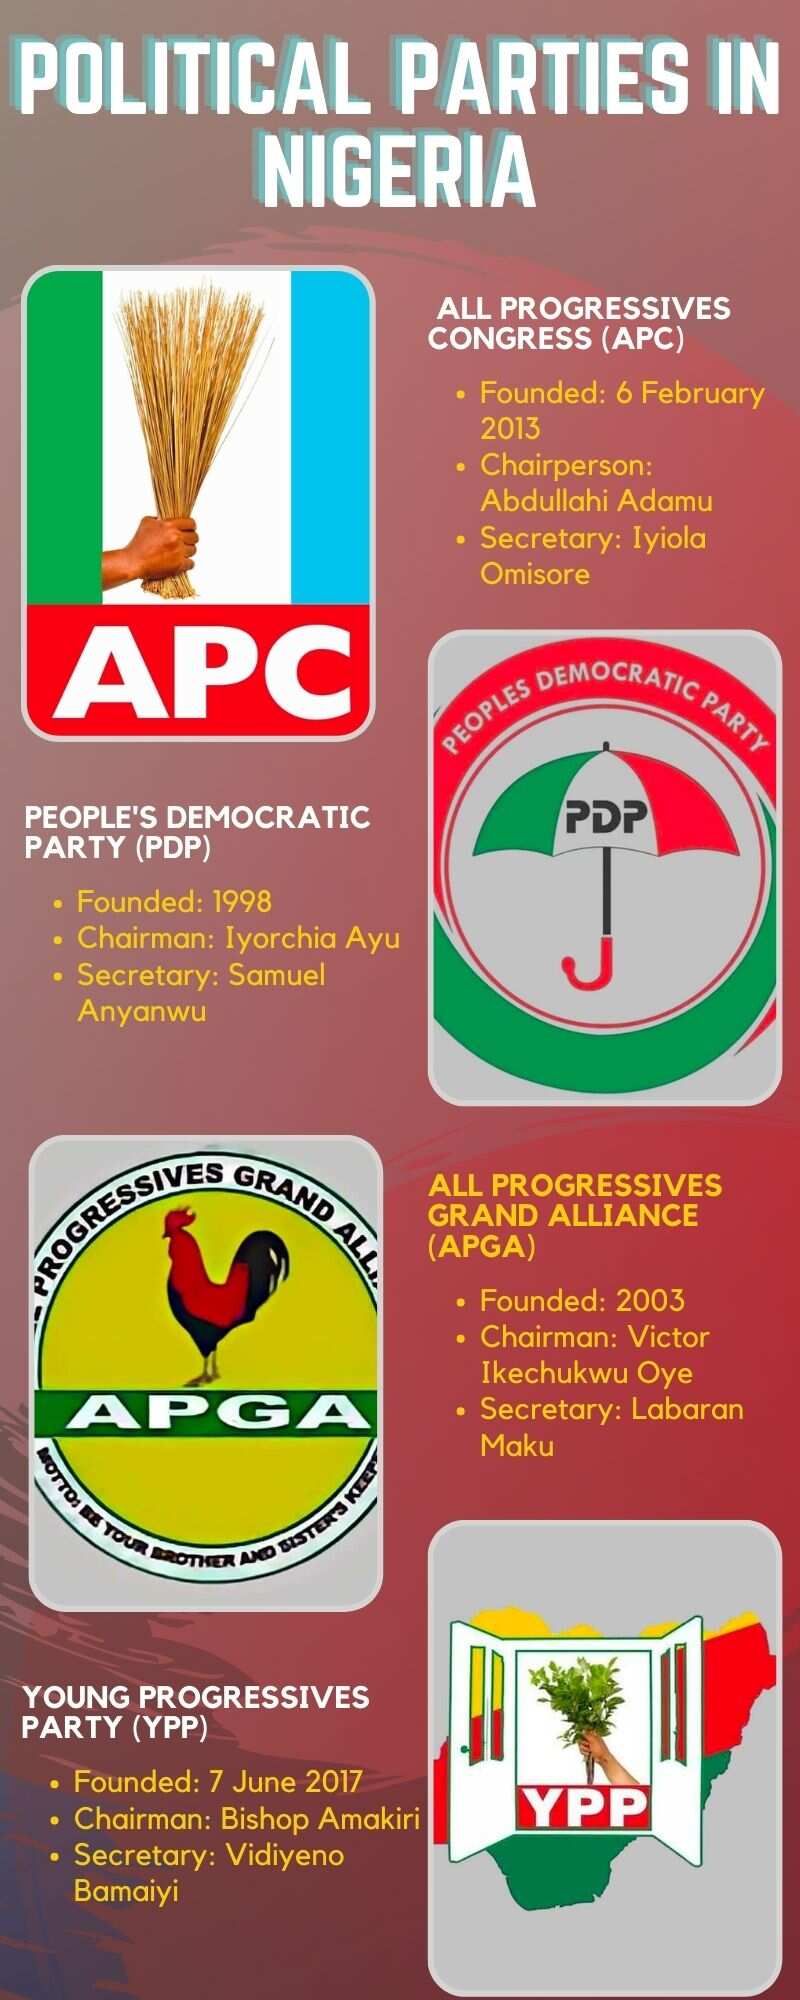 Political parties in Nigeria